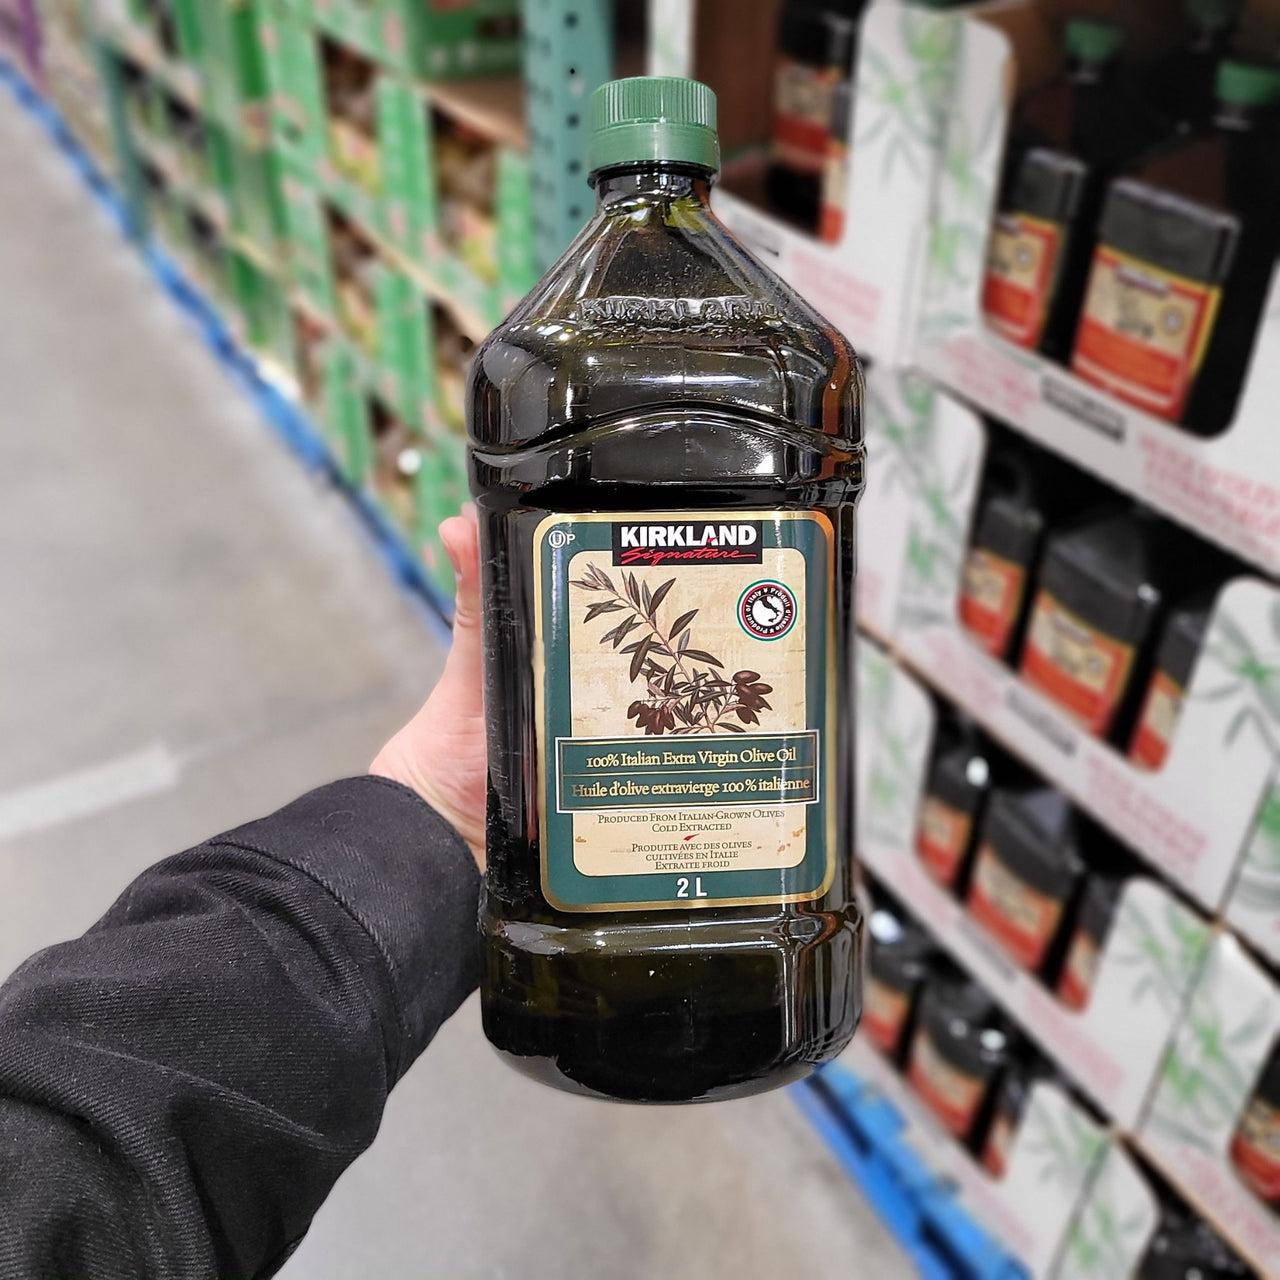 Image of Kirkland 100% Italian Extra Virgin Olive Oil 2L